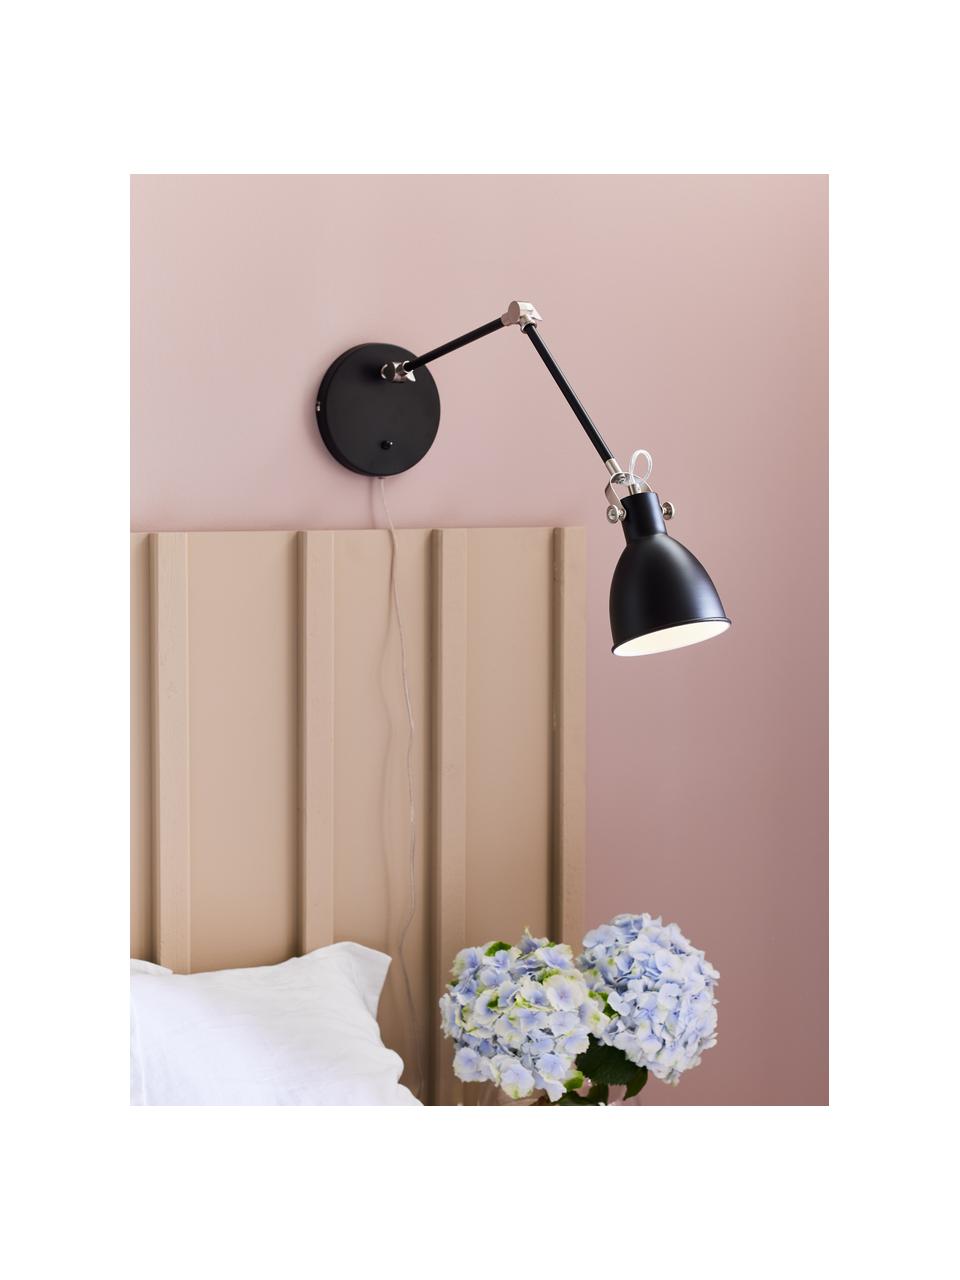 Verstelbare wandlamp House met stekker, Lampenkap: gecoat metaal, Zwart, D 84 x H 18 cm